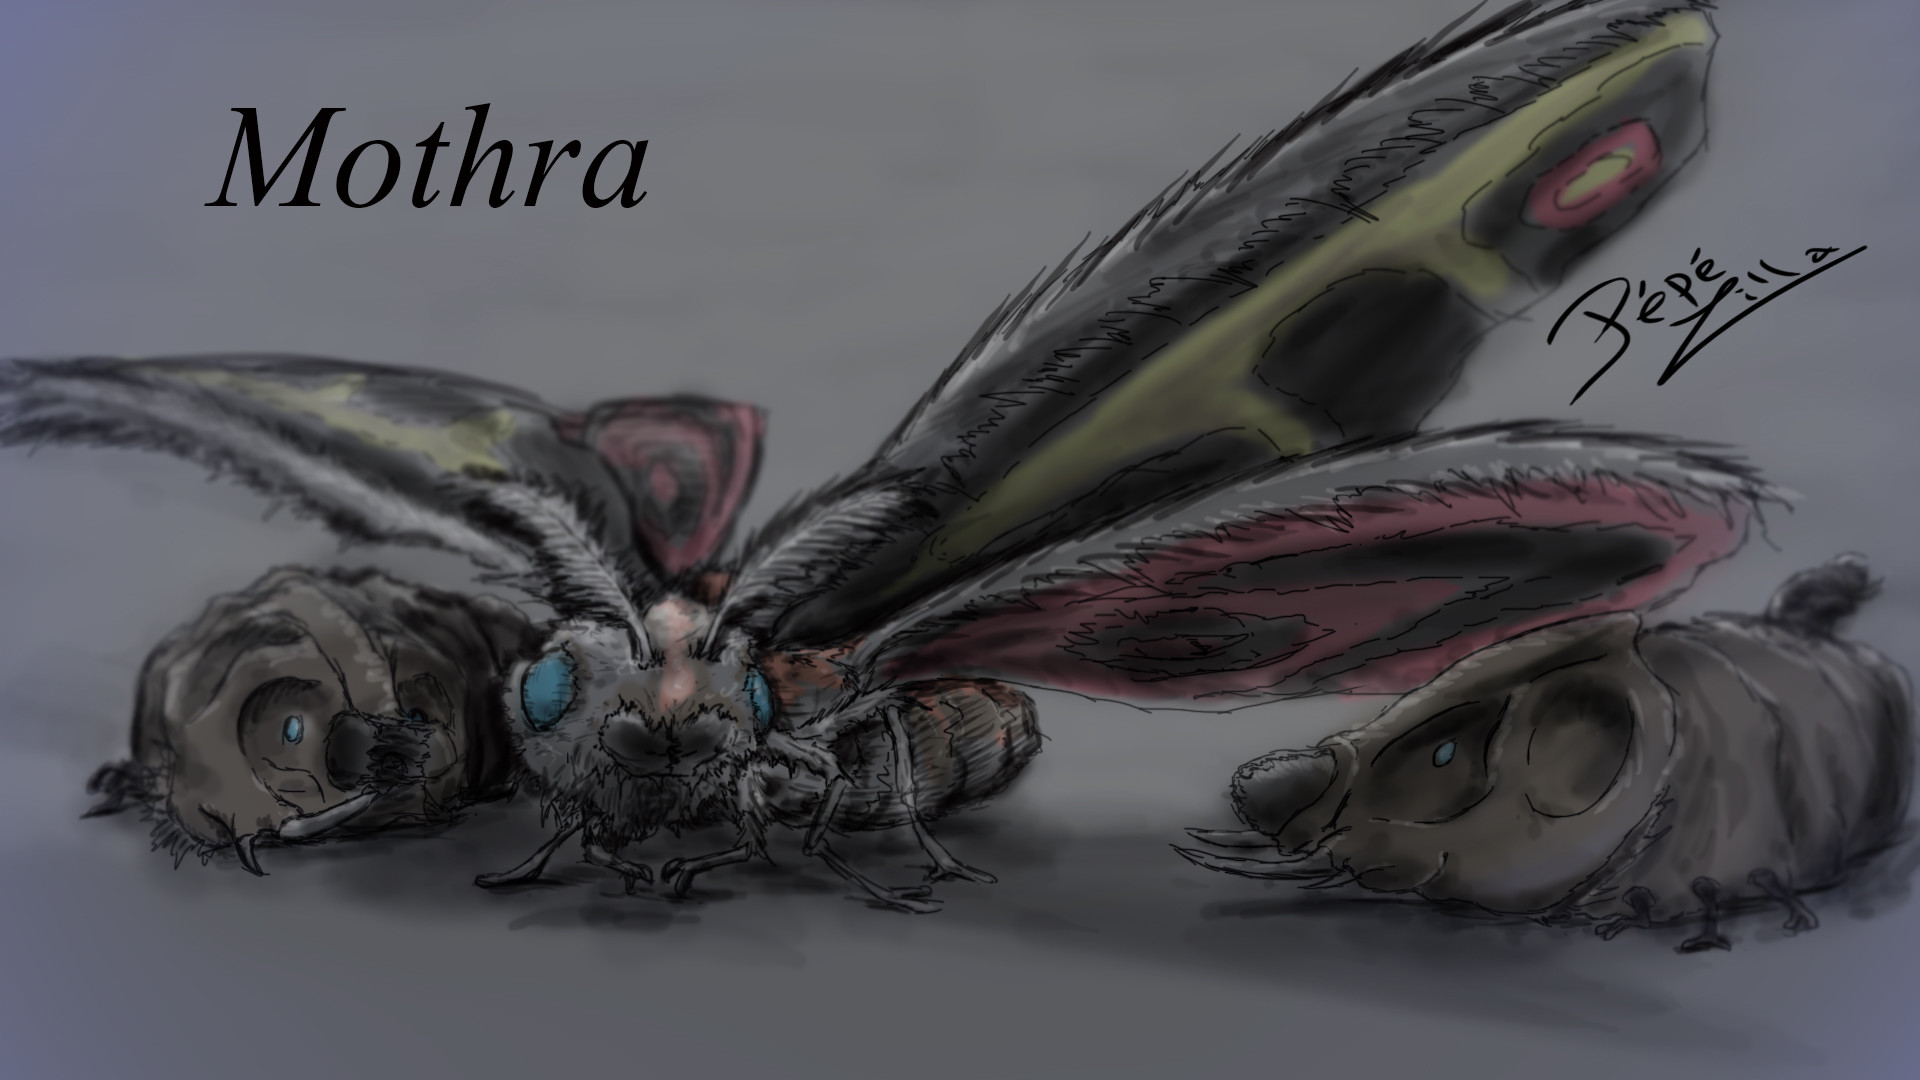 1920x1080 ... 1 Hour - Mothra by pepezilla